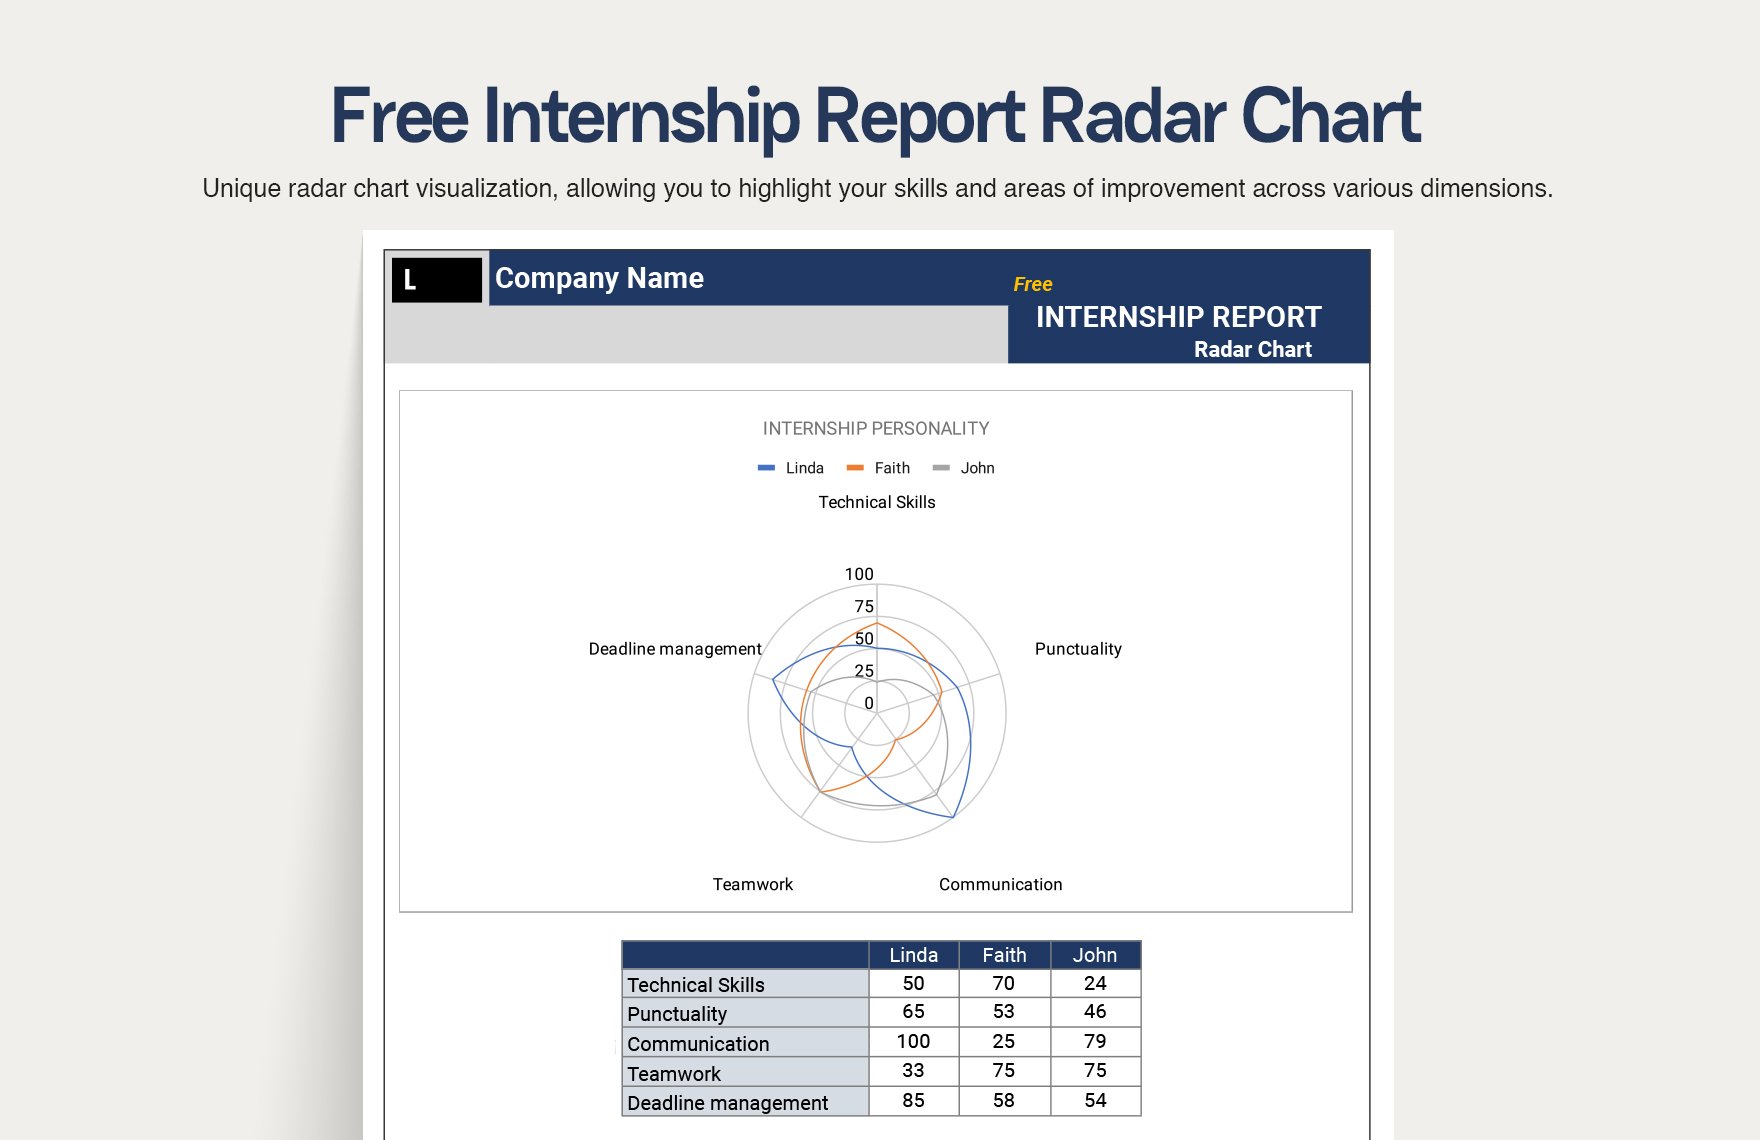 Free Internship Report Radar Chart